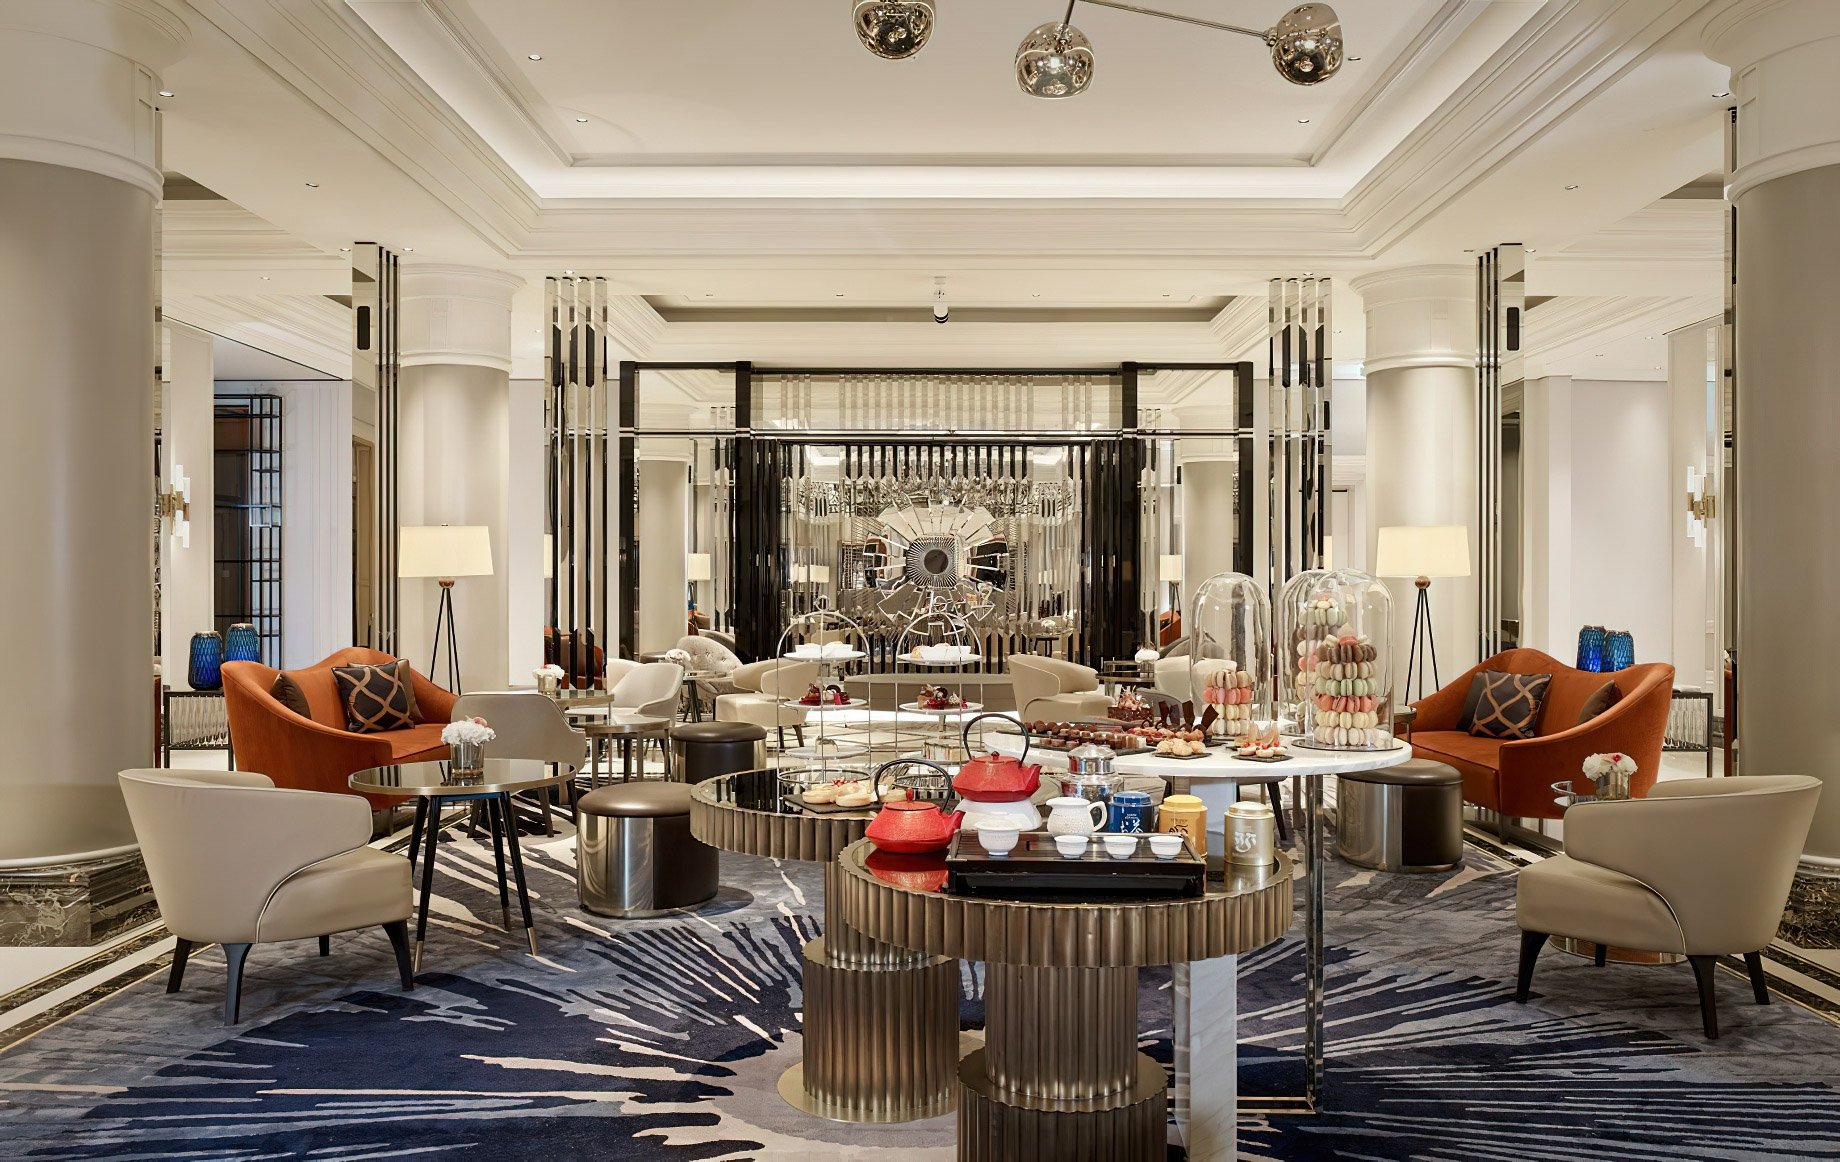 The Ritz-Carlton, Berlin Hotel - Berlin, Germany - The Lounge Interior